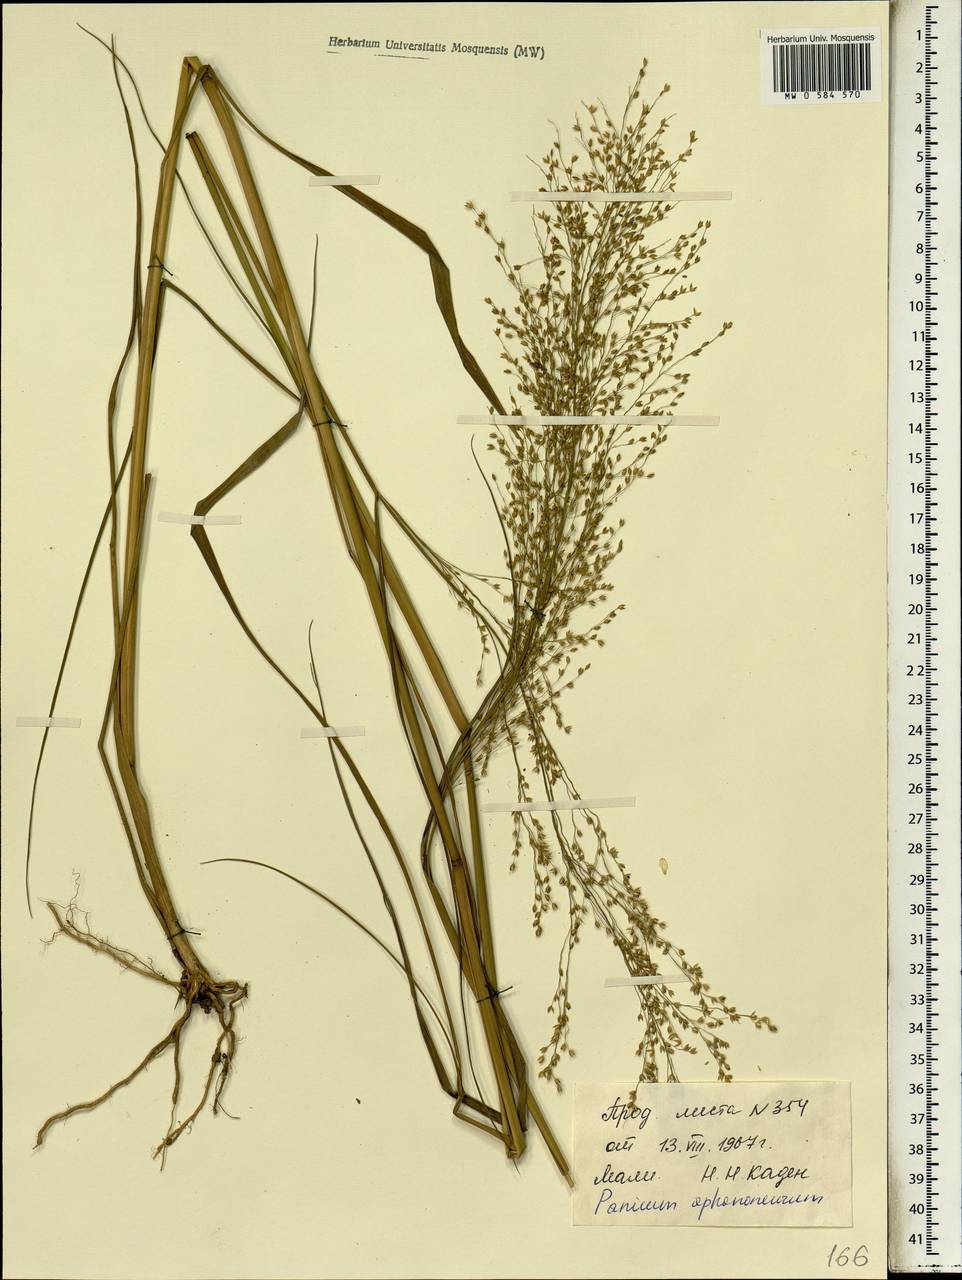 Panicum fluviicola Steud., Africa (AFR) (Mali)